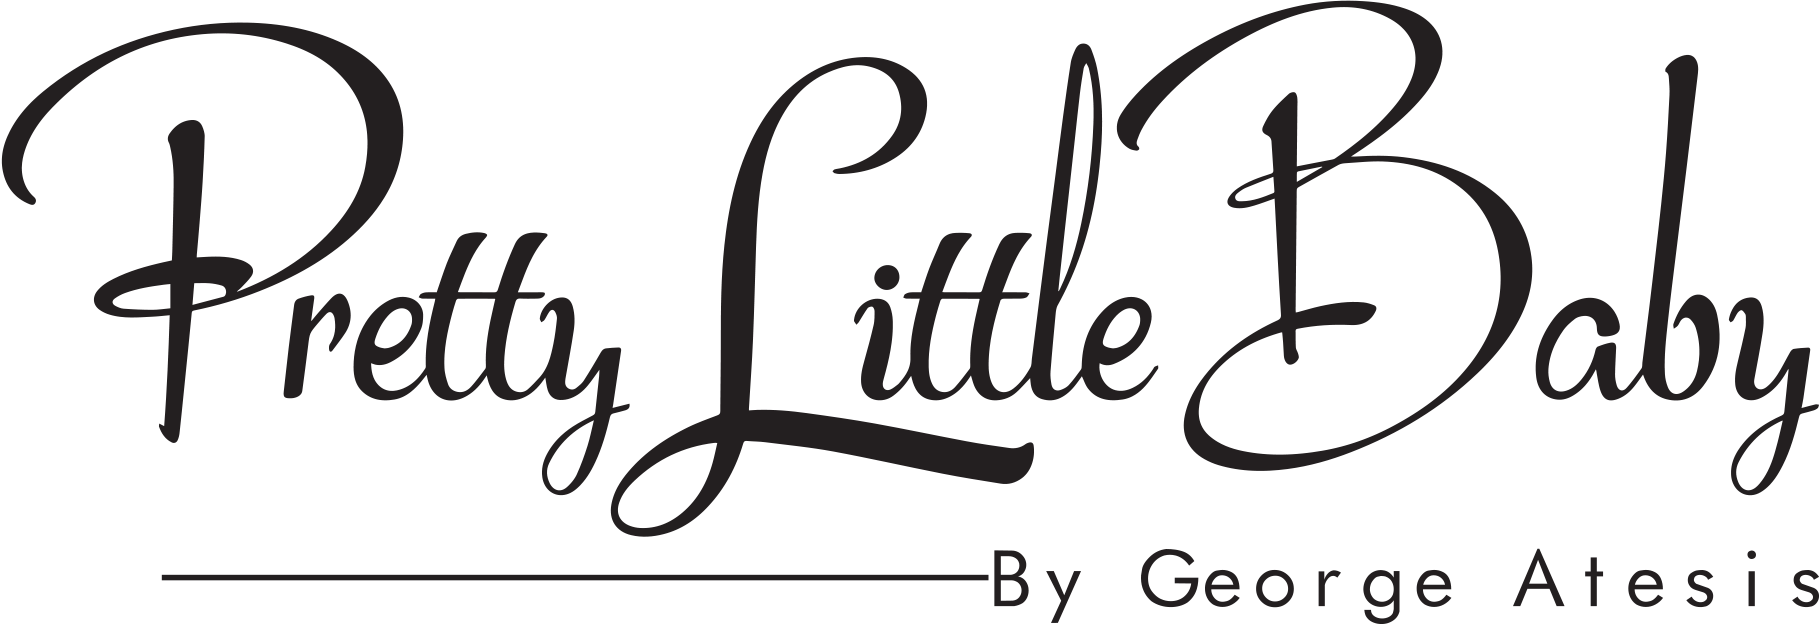 prettylittlebaby logo